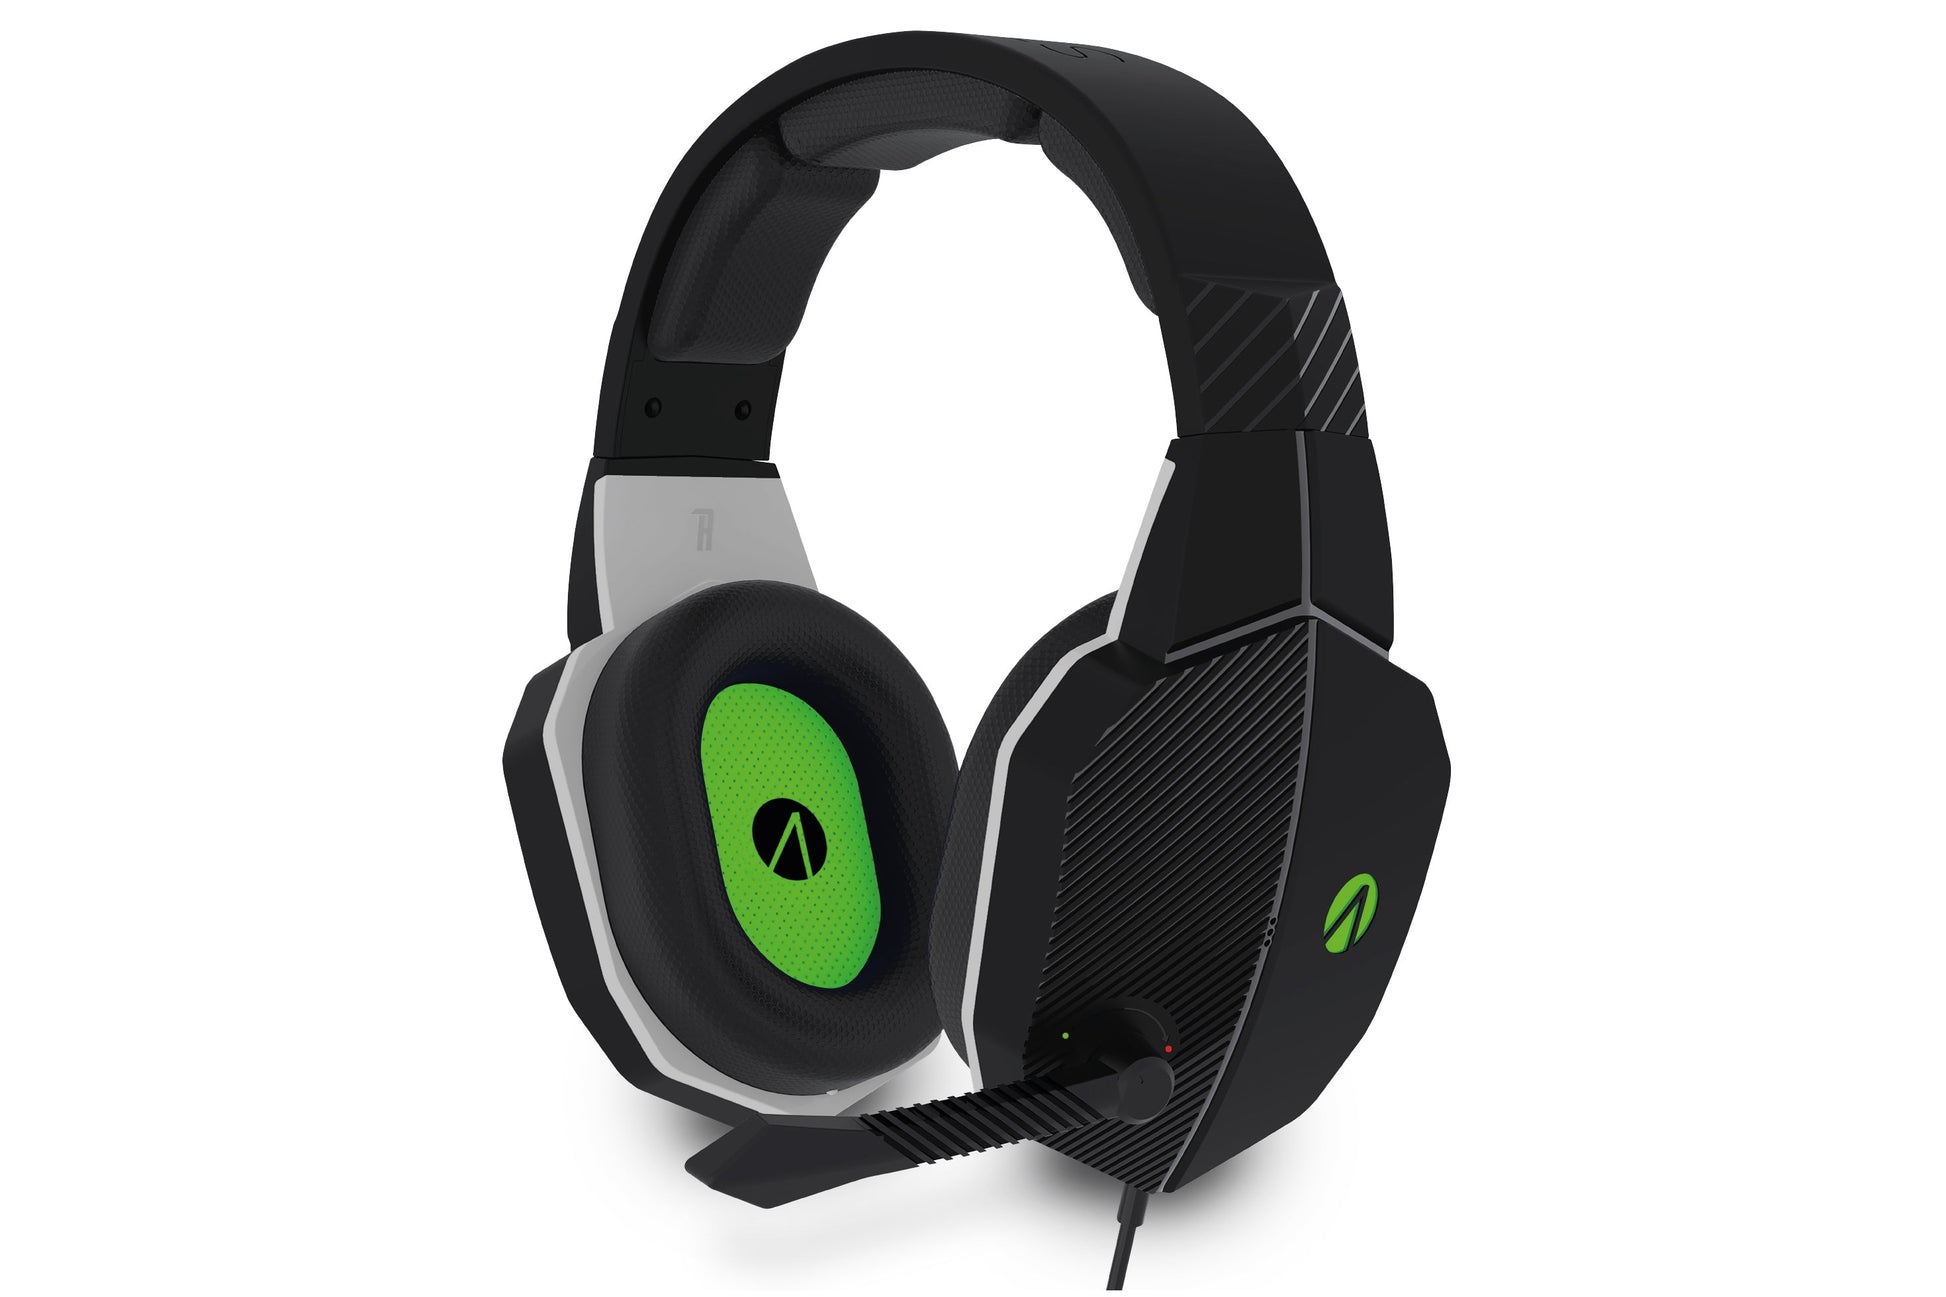 Stealth Phantom X Premium Stereo Gaming Headset - Black and Green - maplin.co.uk